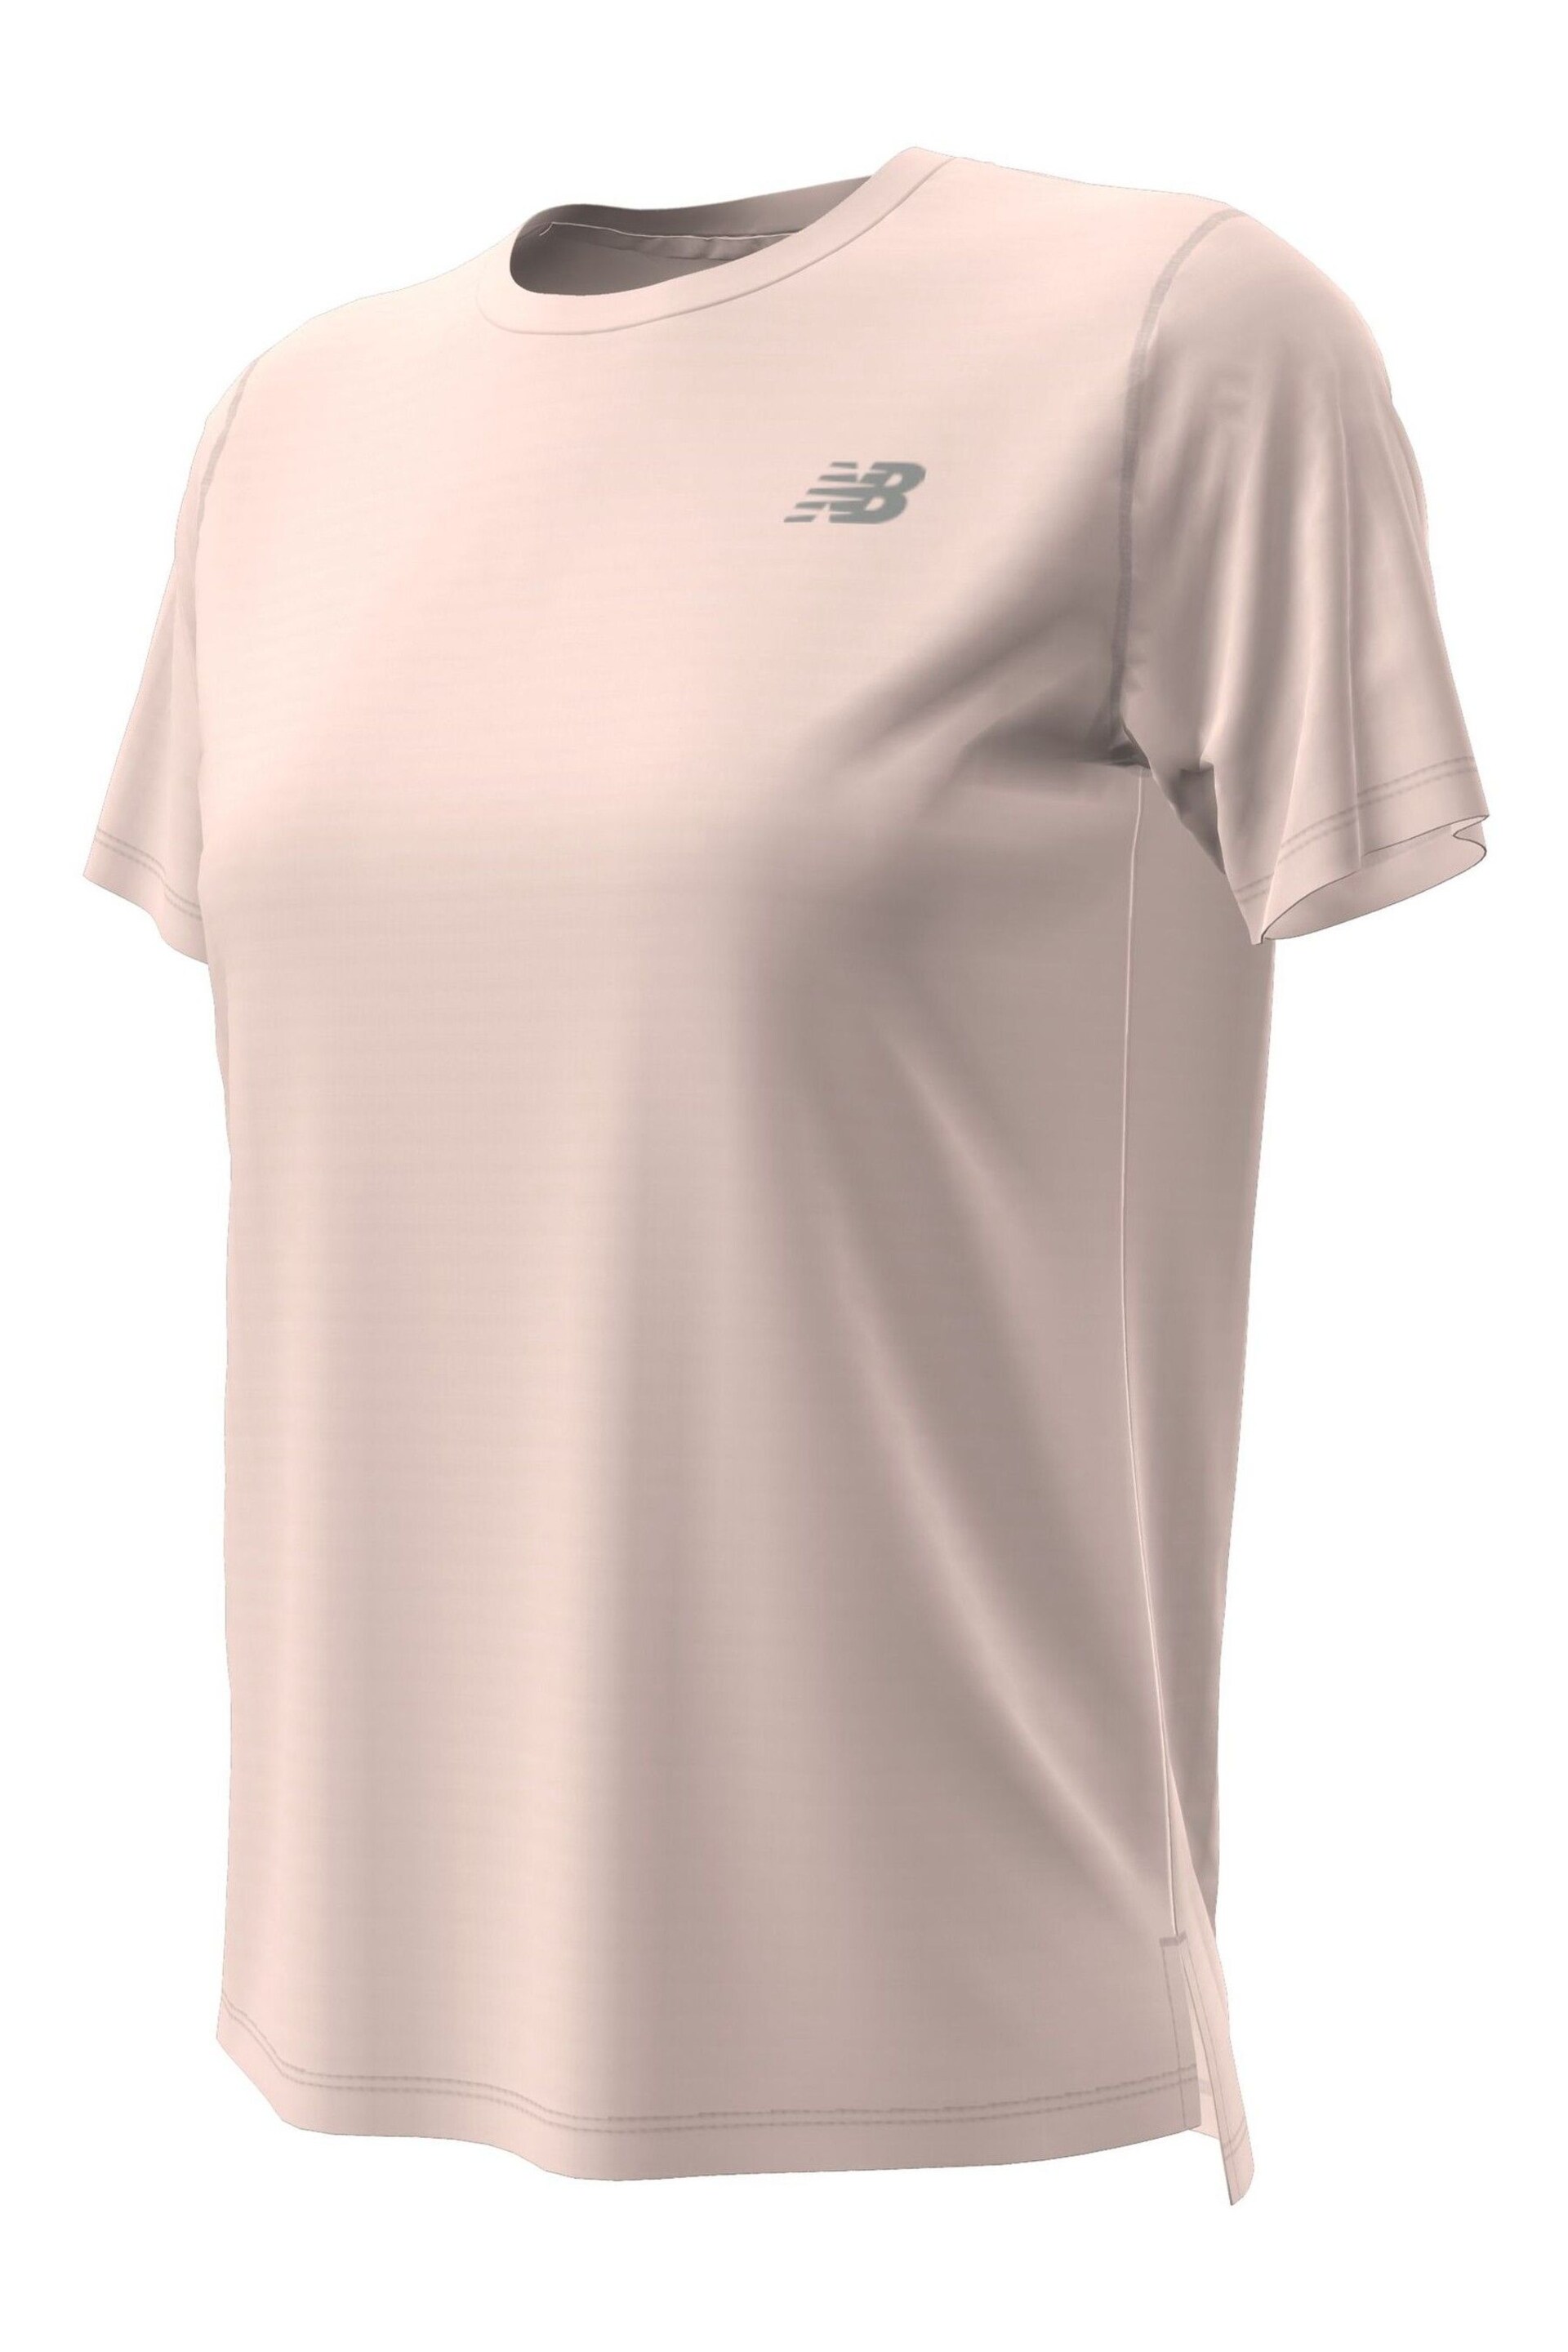 New Balance Pink Womens Short Sleeve T-Shirt - Image 4 of 4